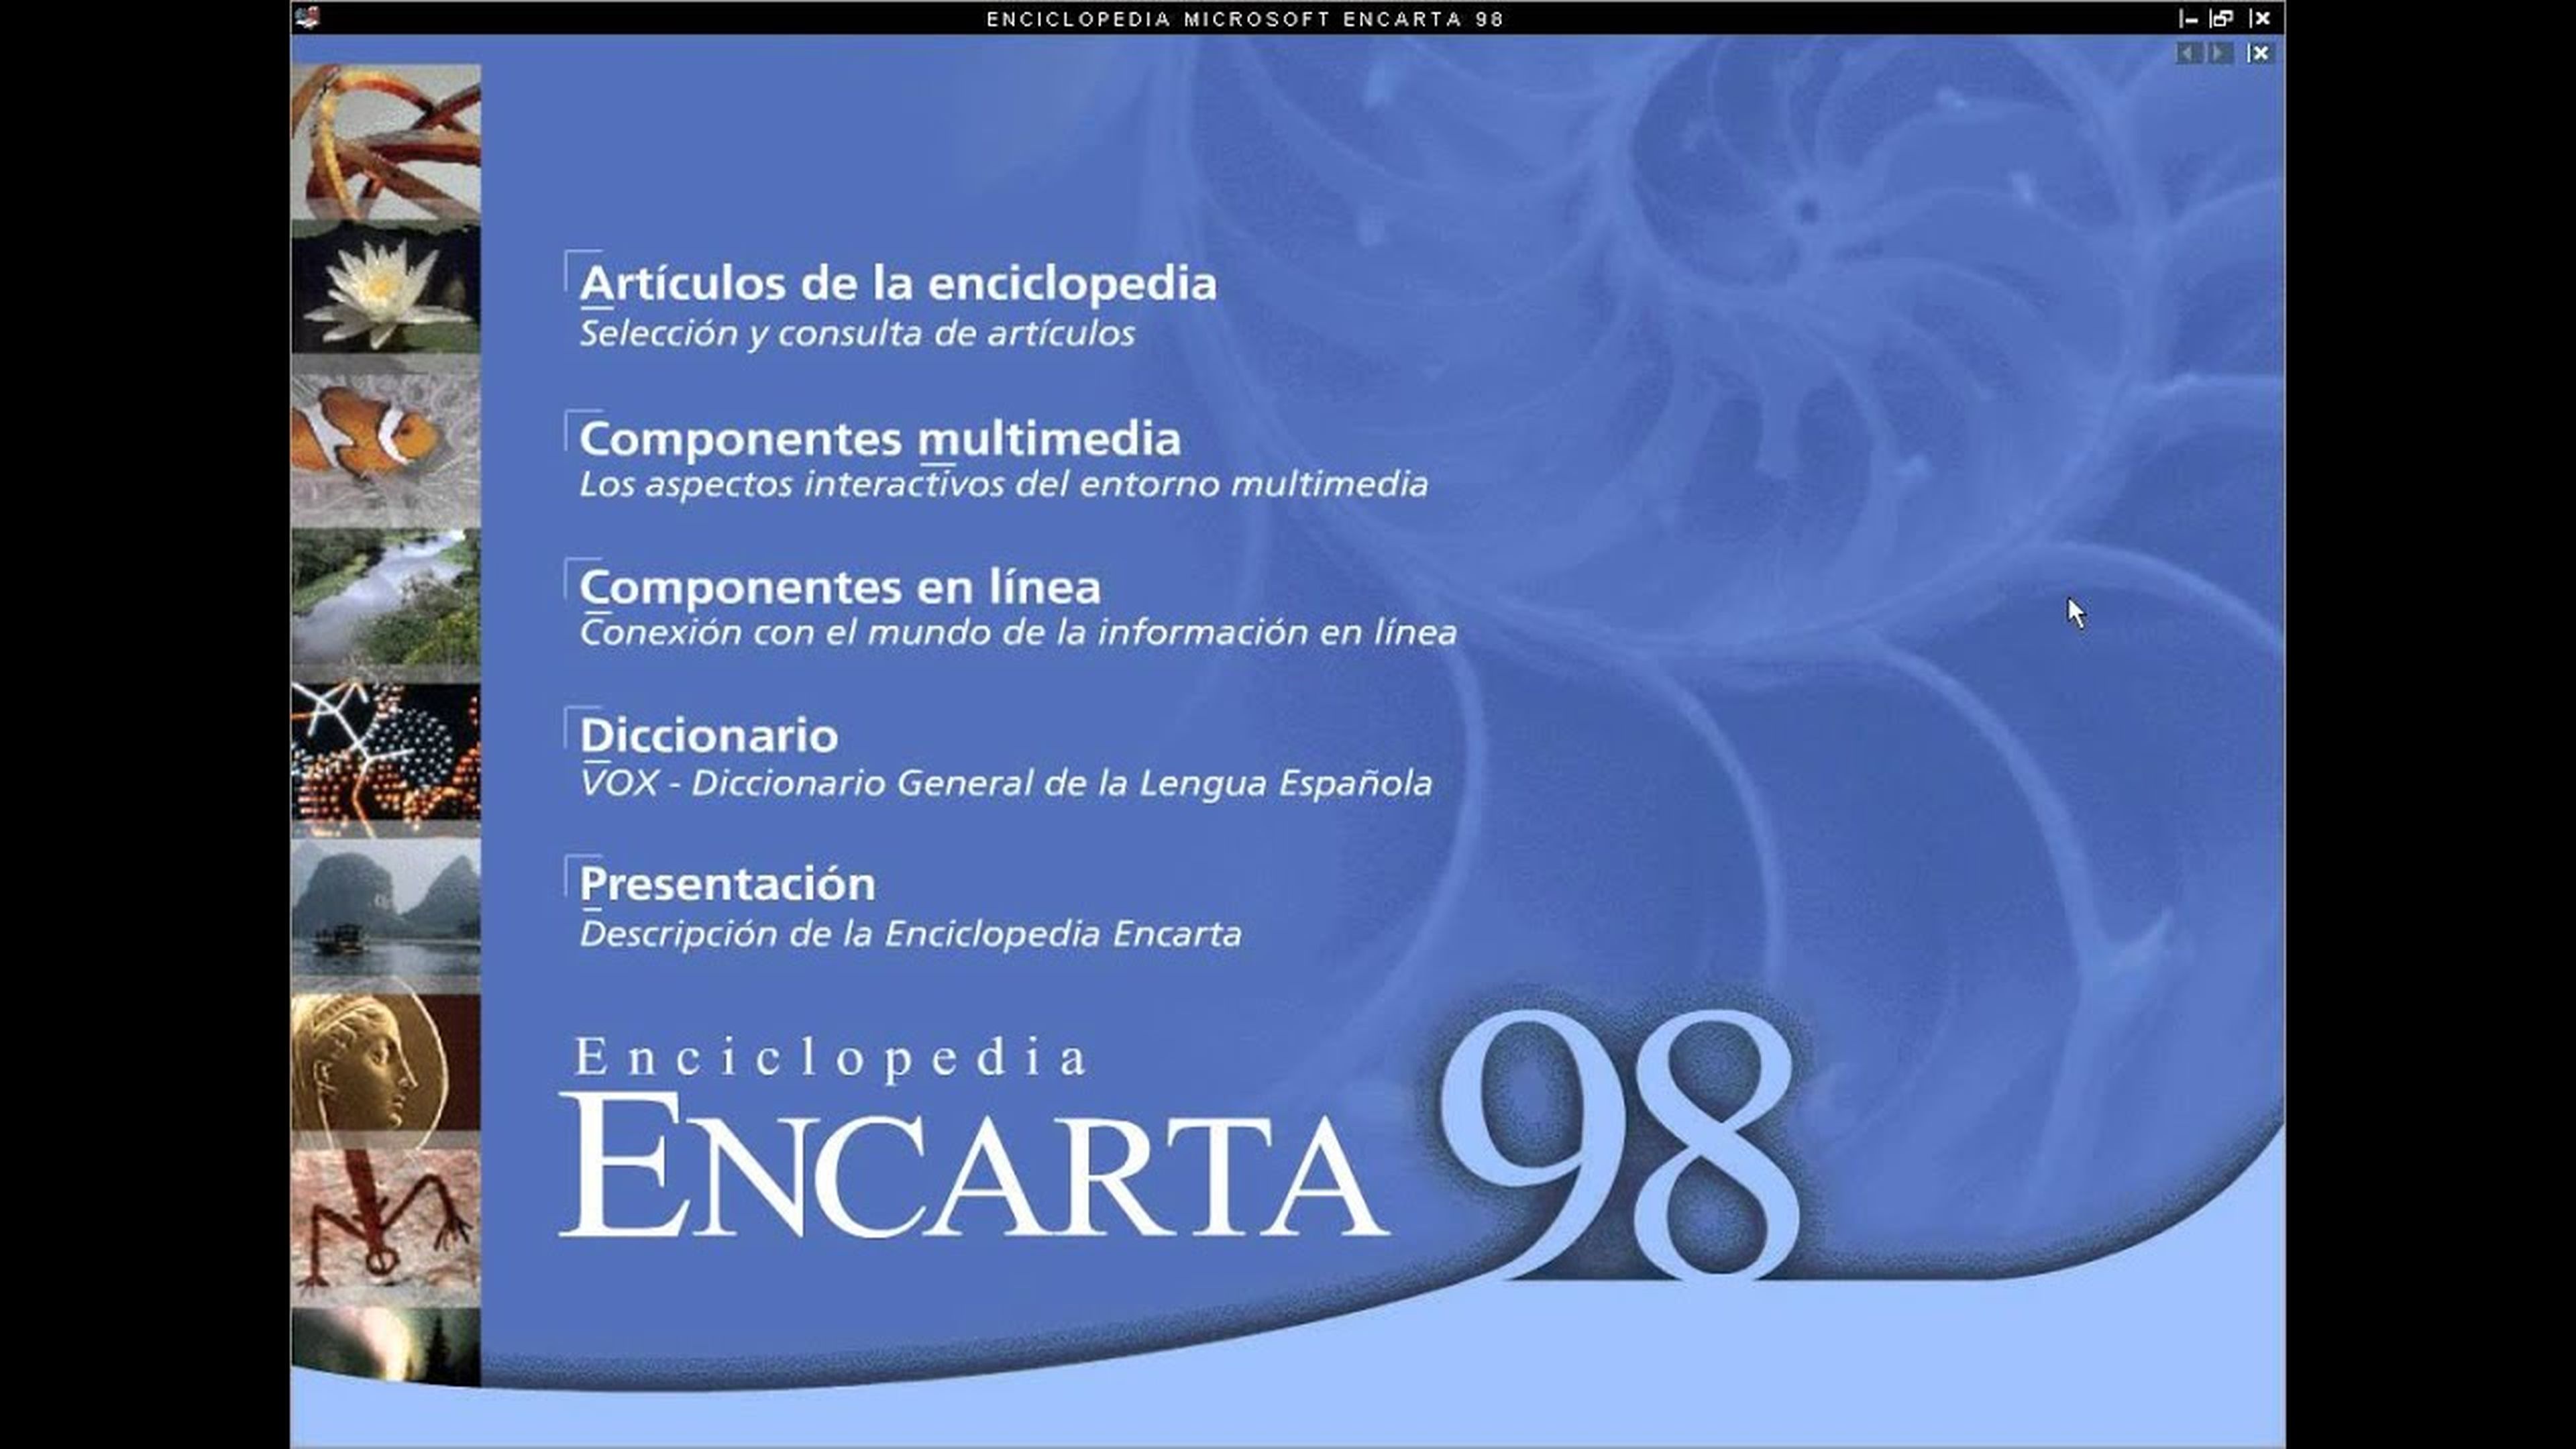 Microsoft Encarta 98